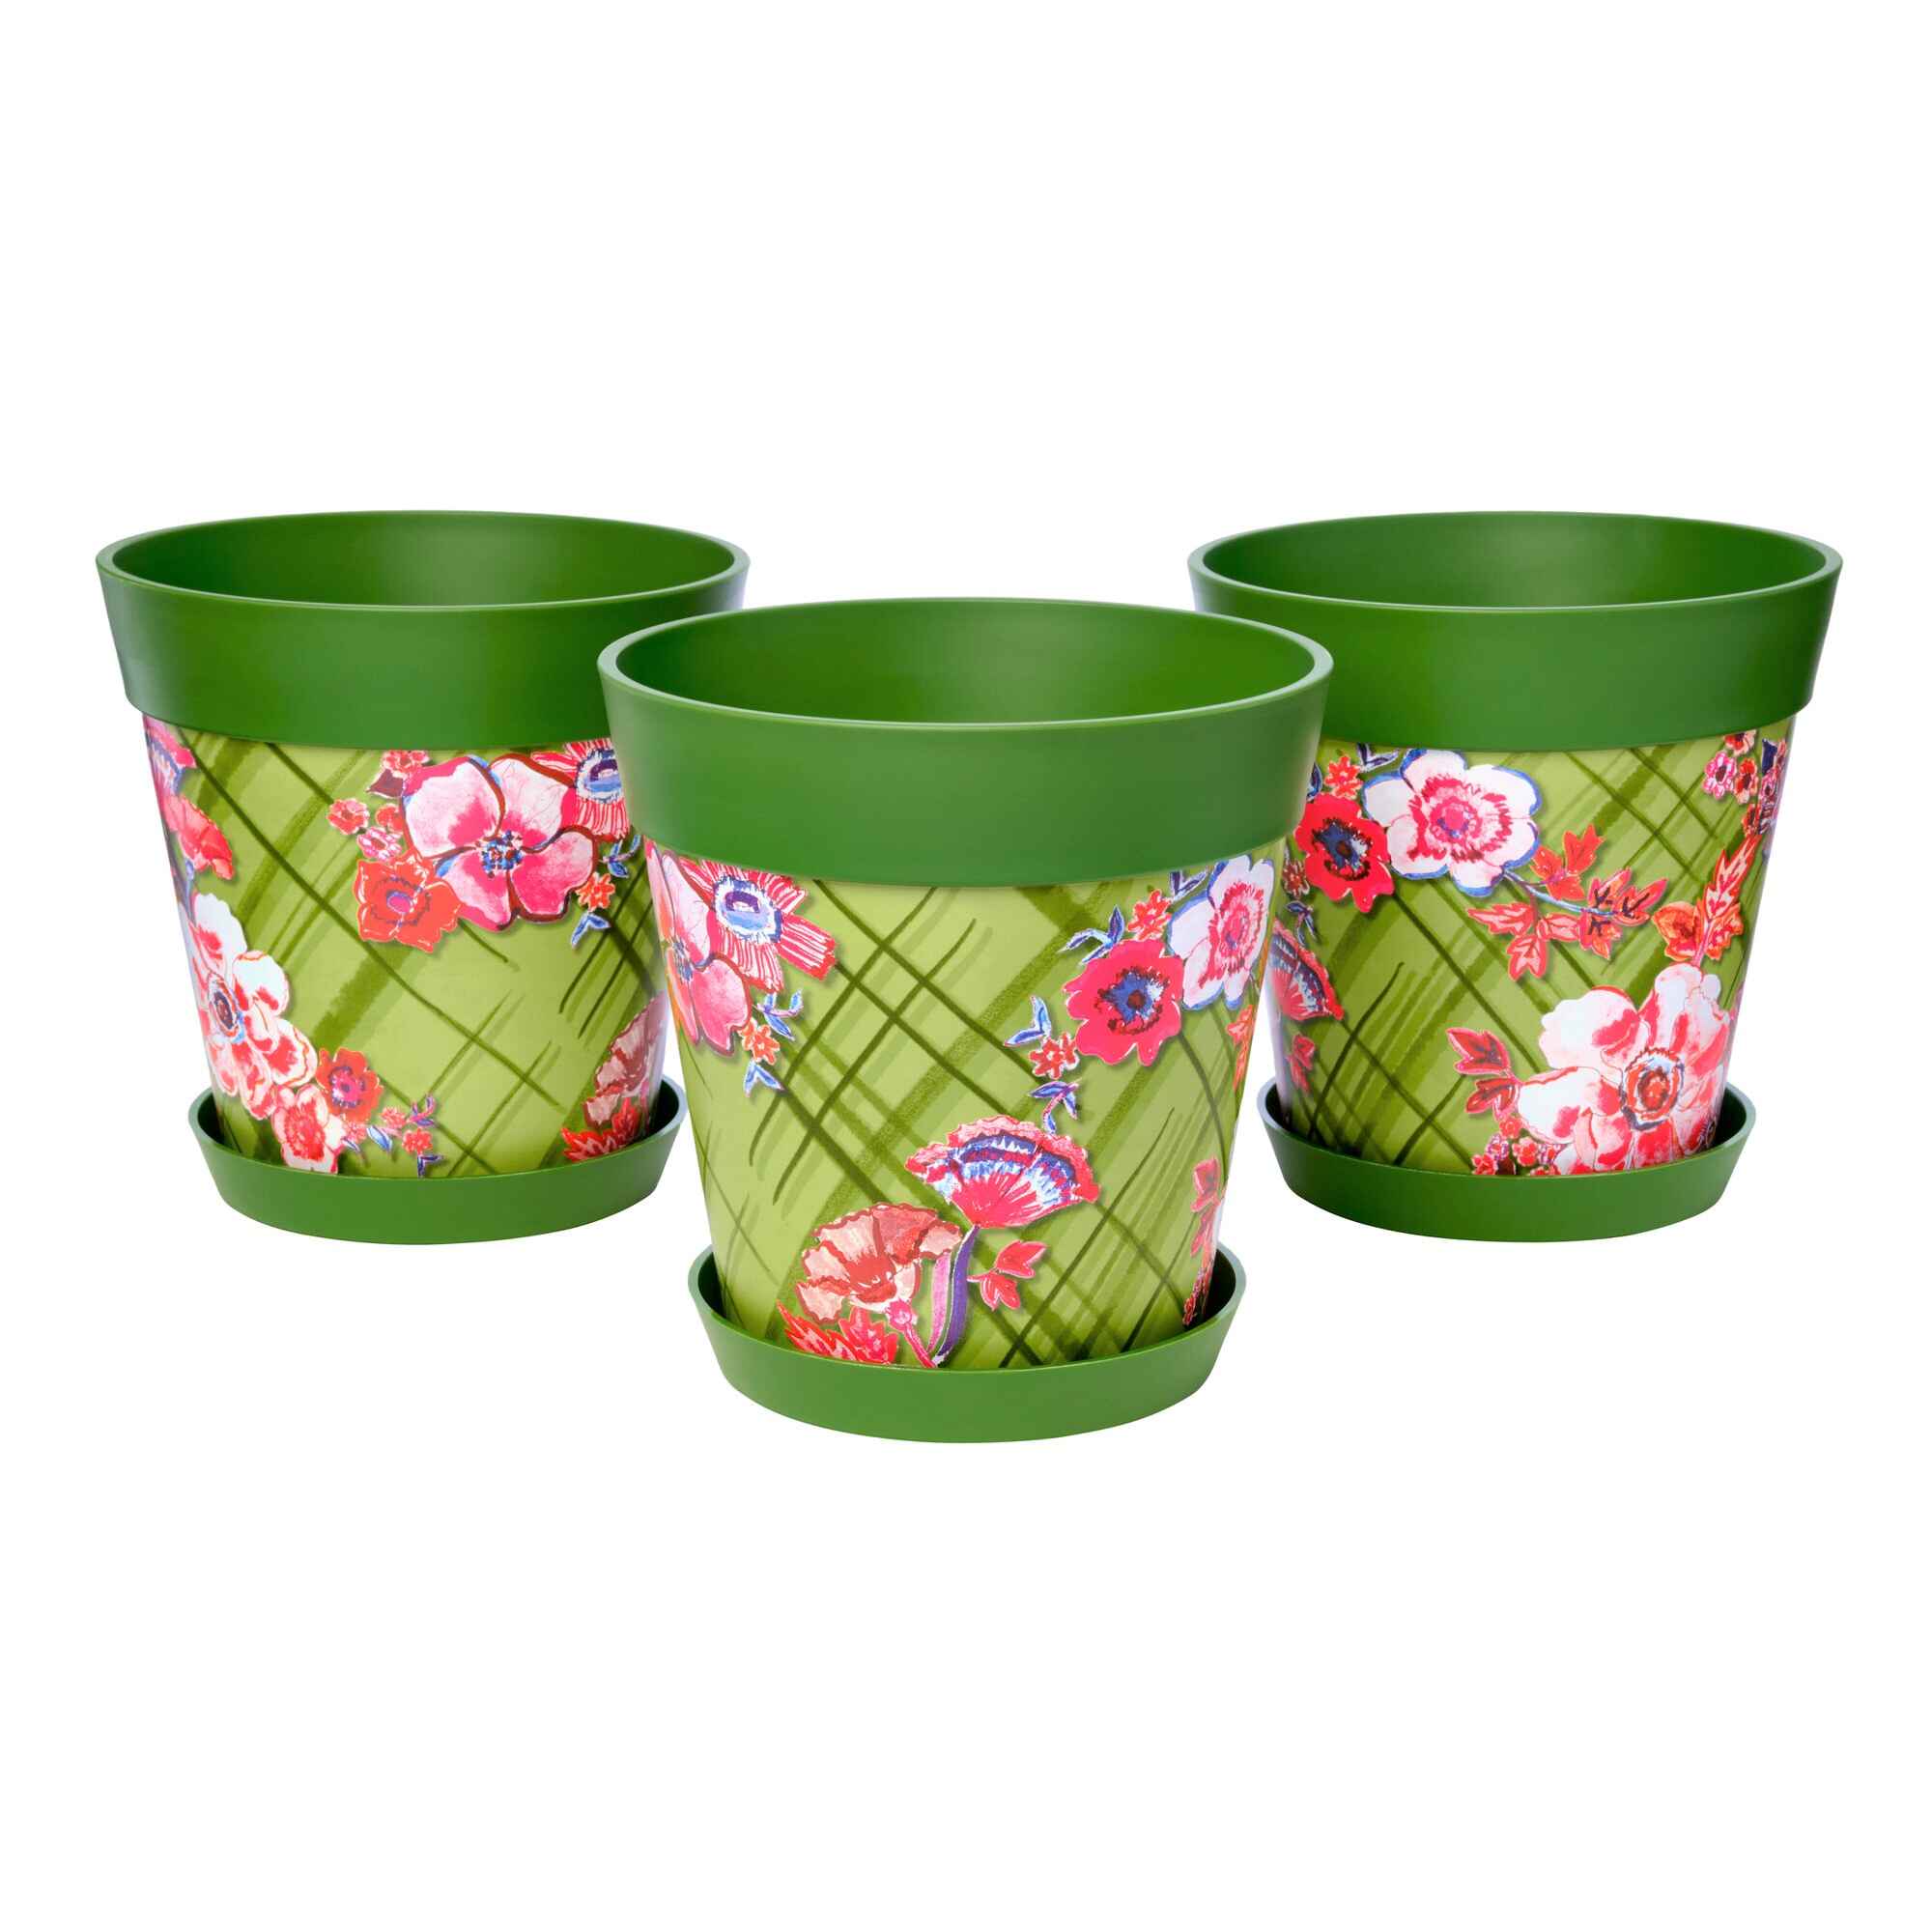 Picture of 3 Medium 22cm Green Trellis Pattern Indoor/Outdoor Flower Pot and Saucers 